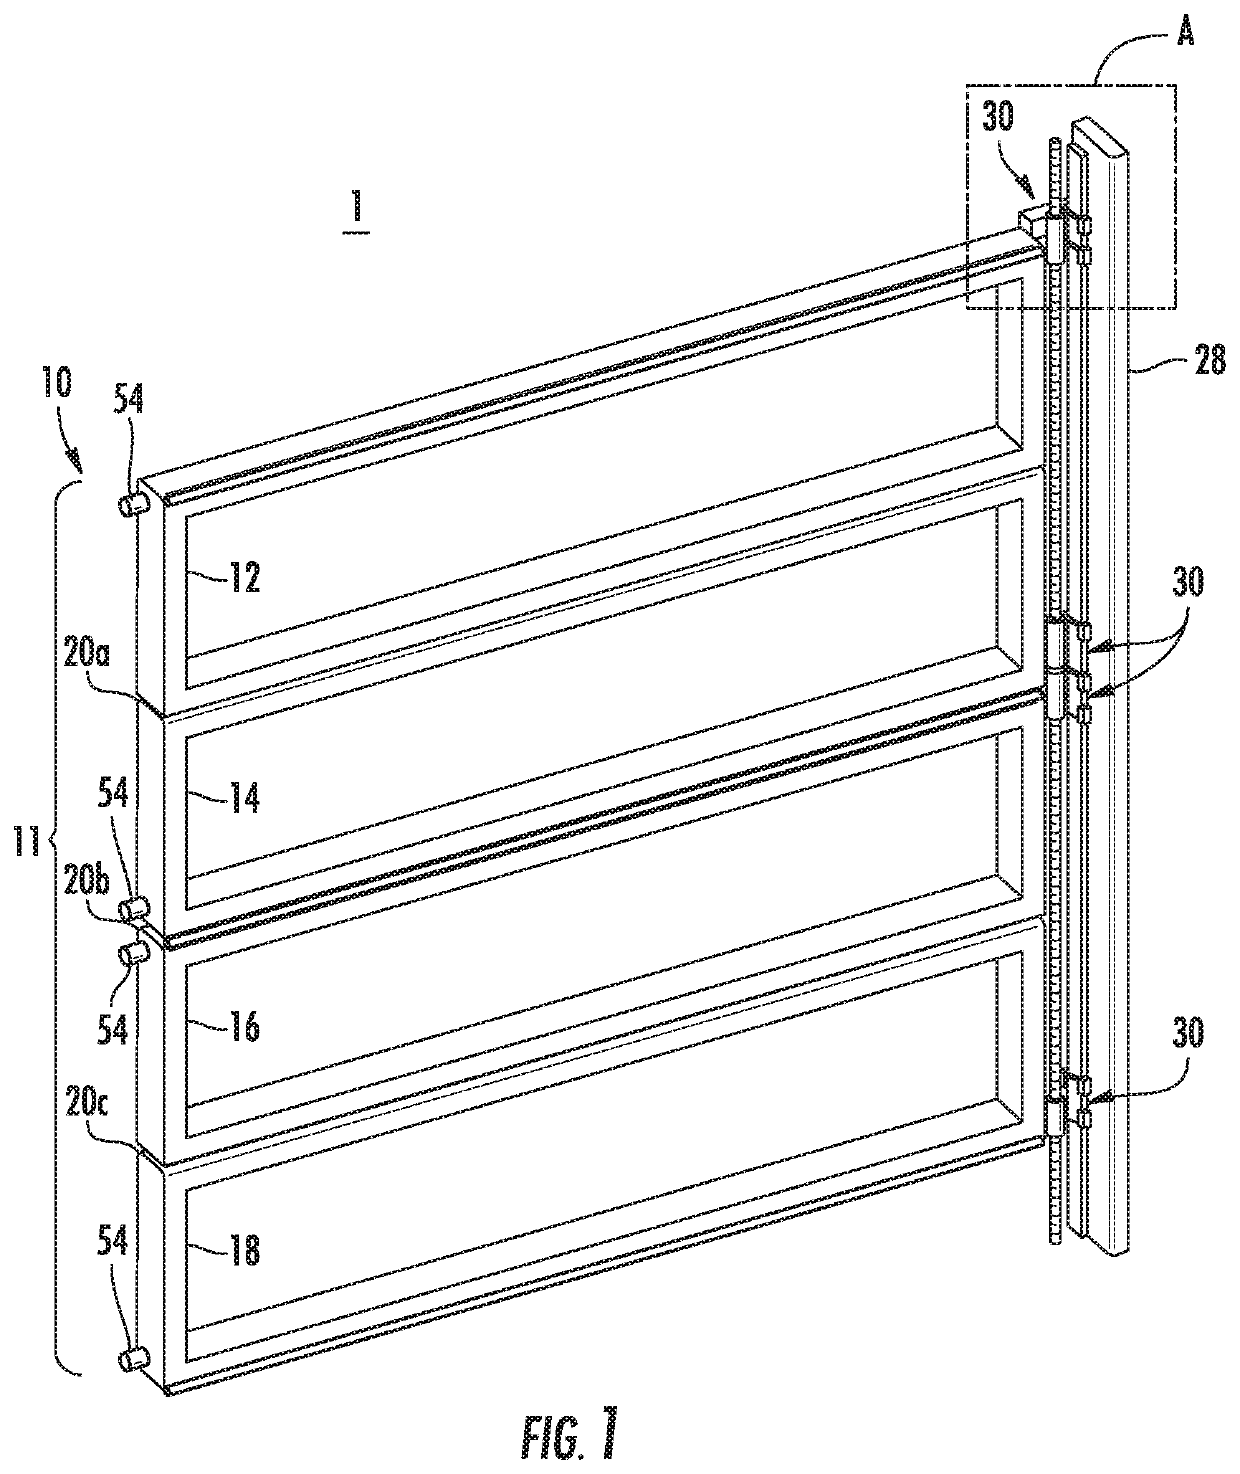 Vertical door system with ball screw drive